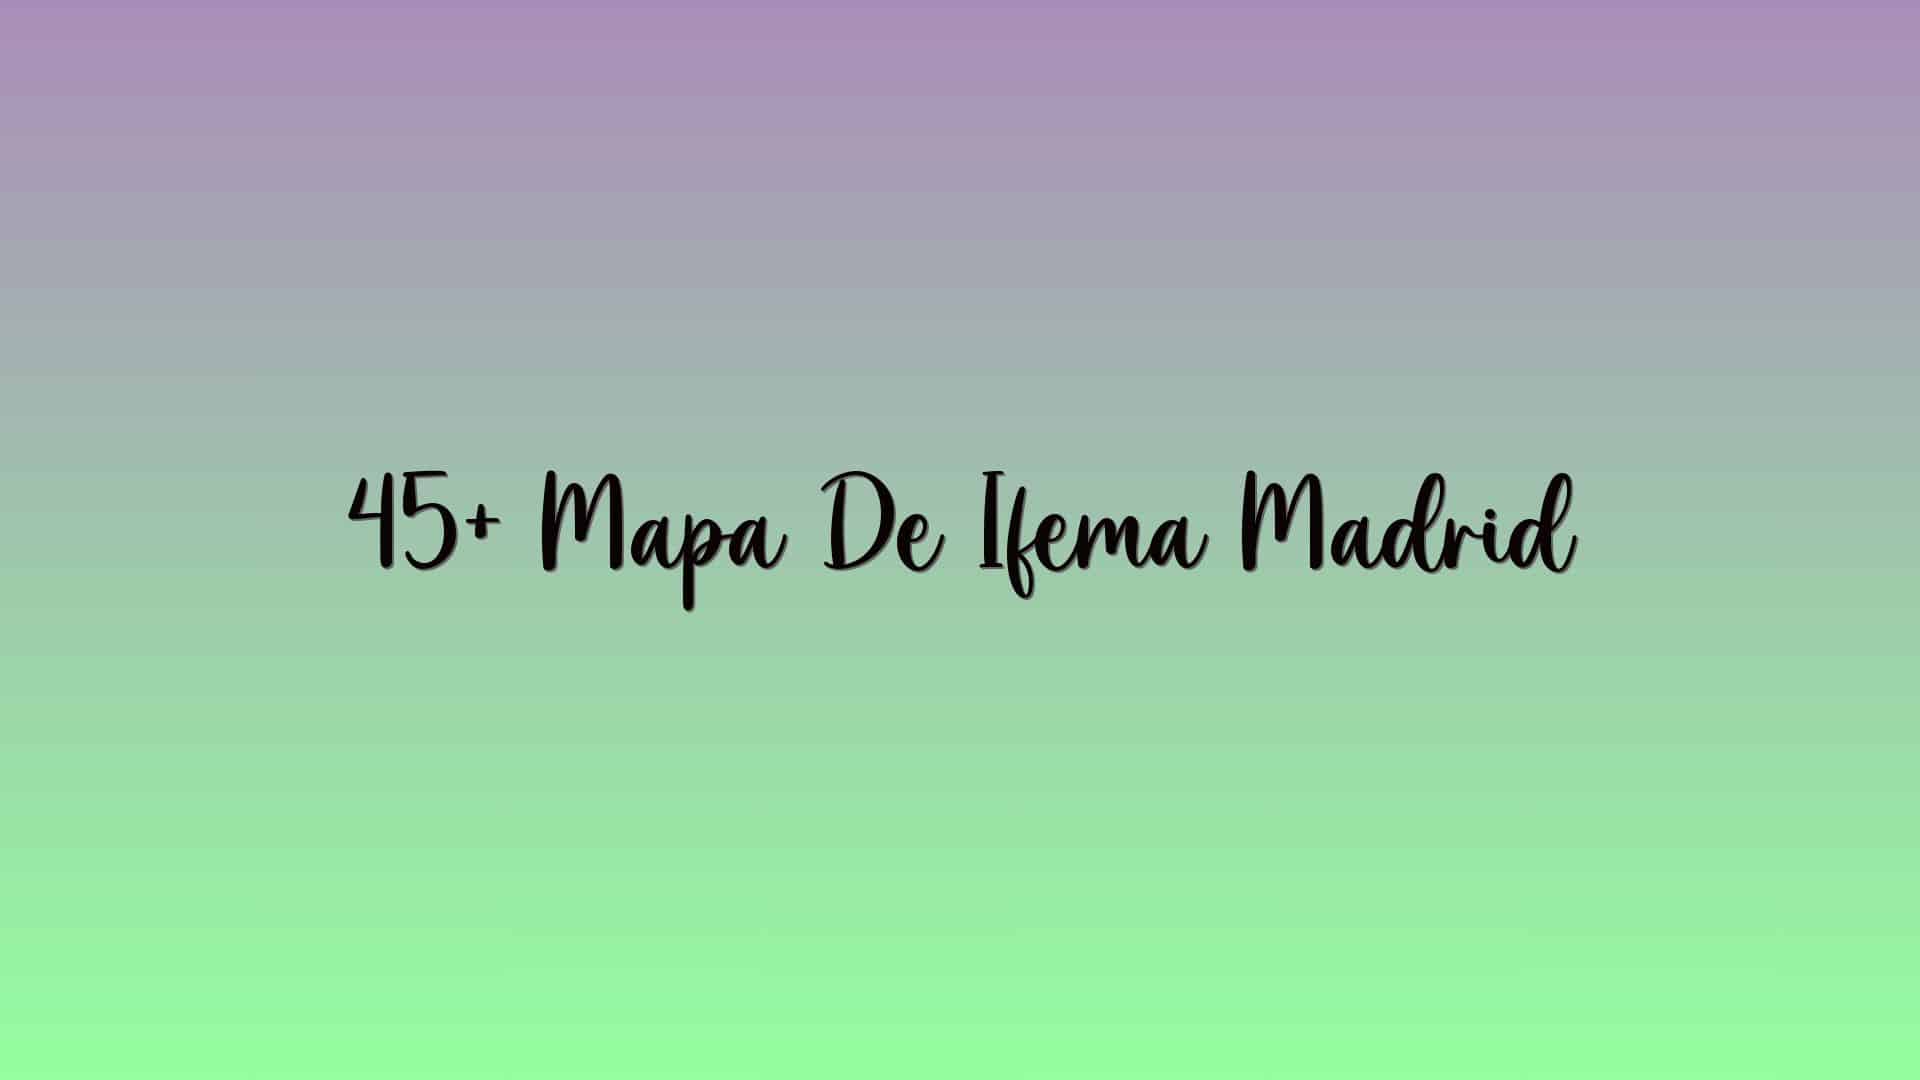 45+ Mapa De Ifema Madrid